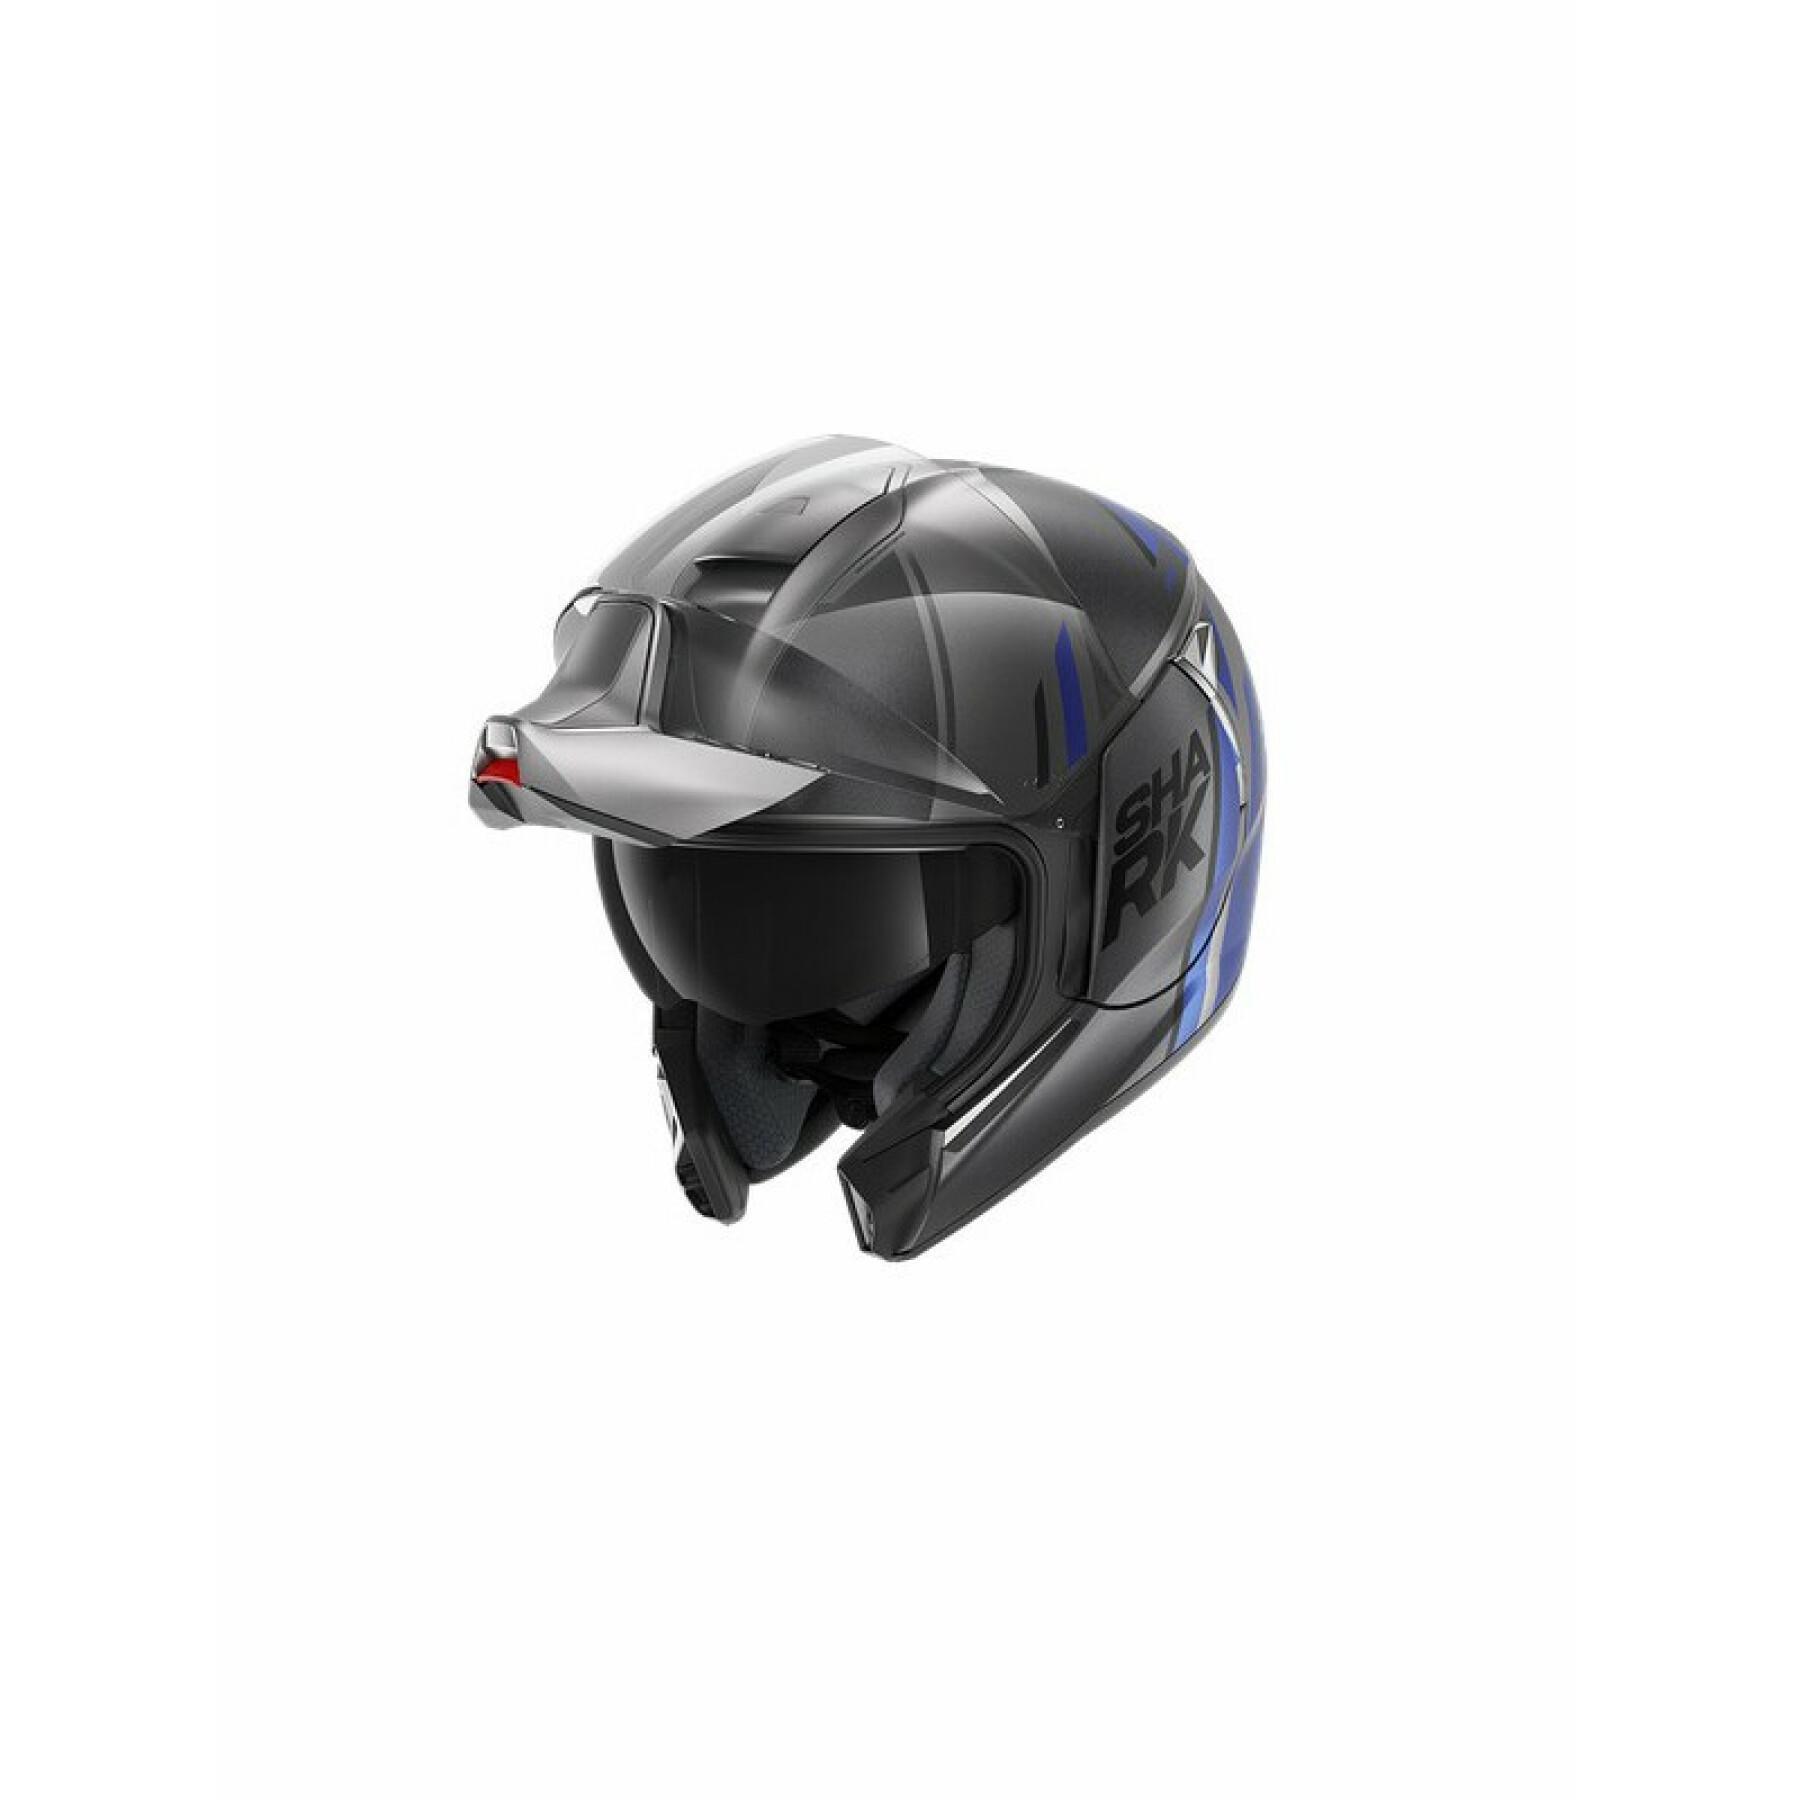 Modular motorcycle helmet Shark evojet vyda